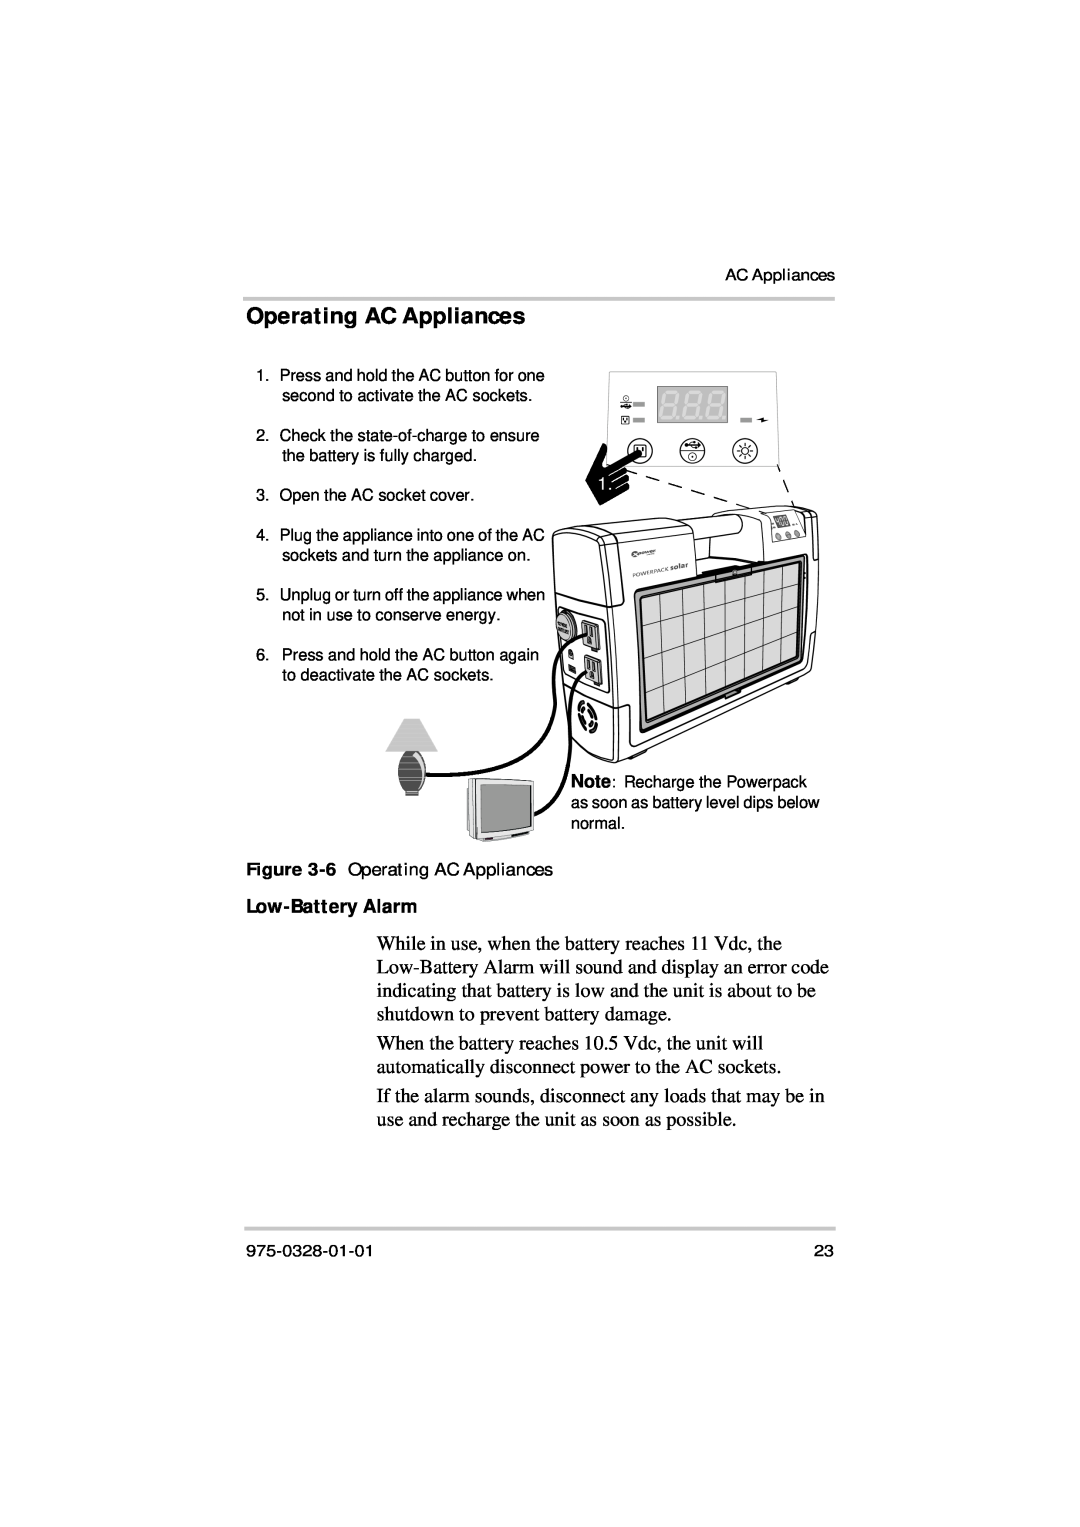 Xantrex Technology Solar 400 manual Operating AC Appliances, Low-Battery Alarm 